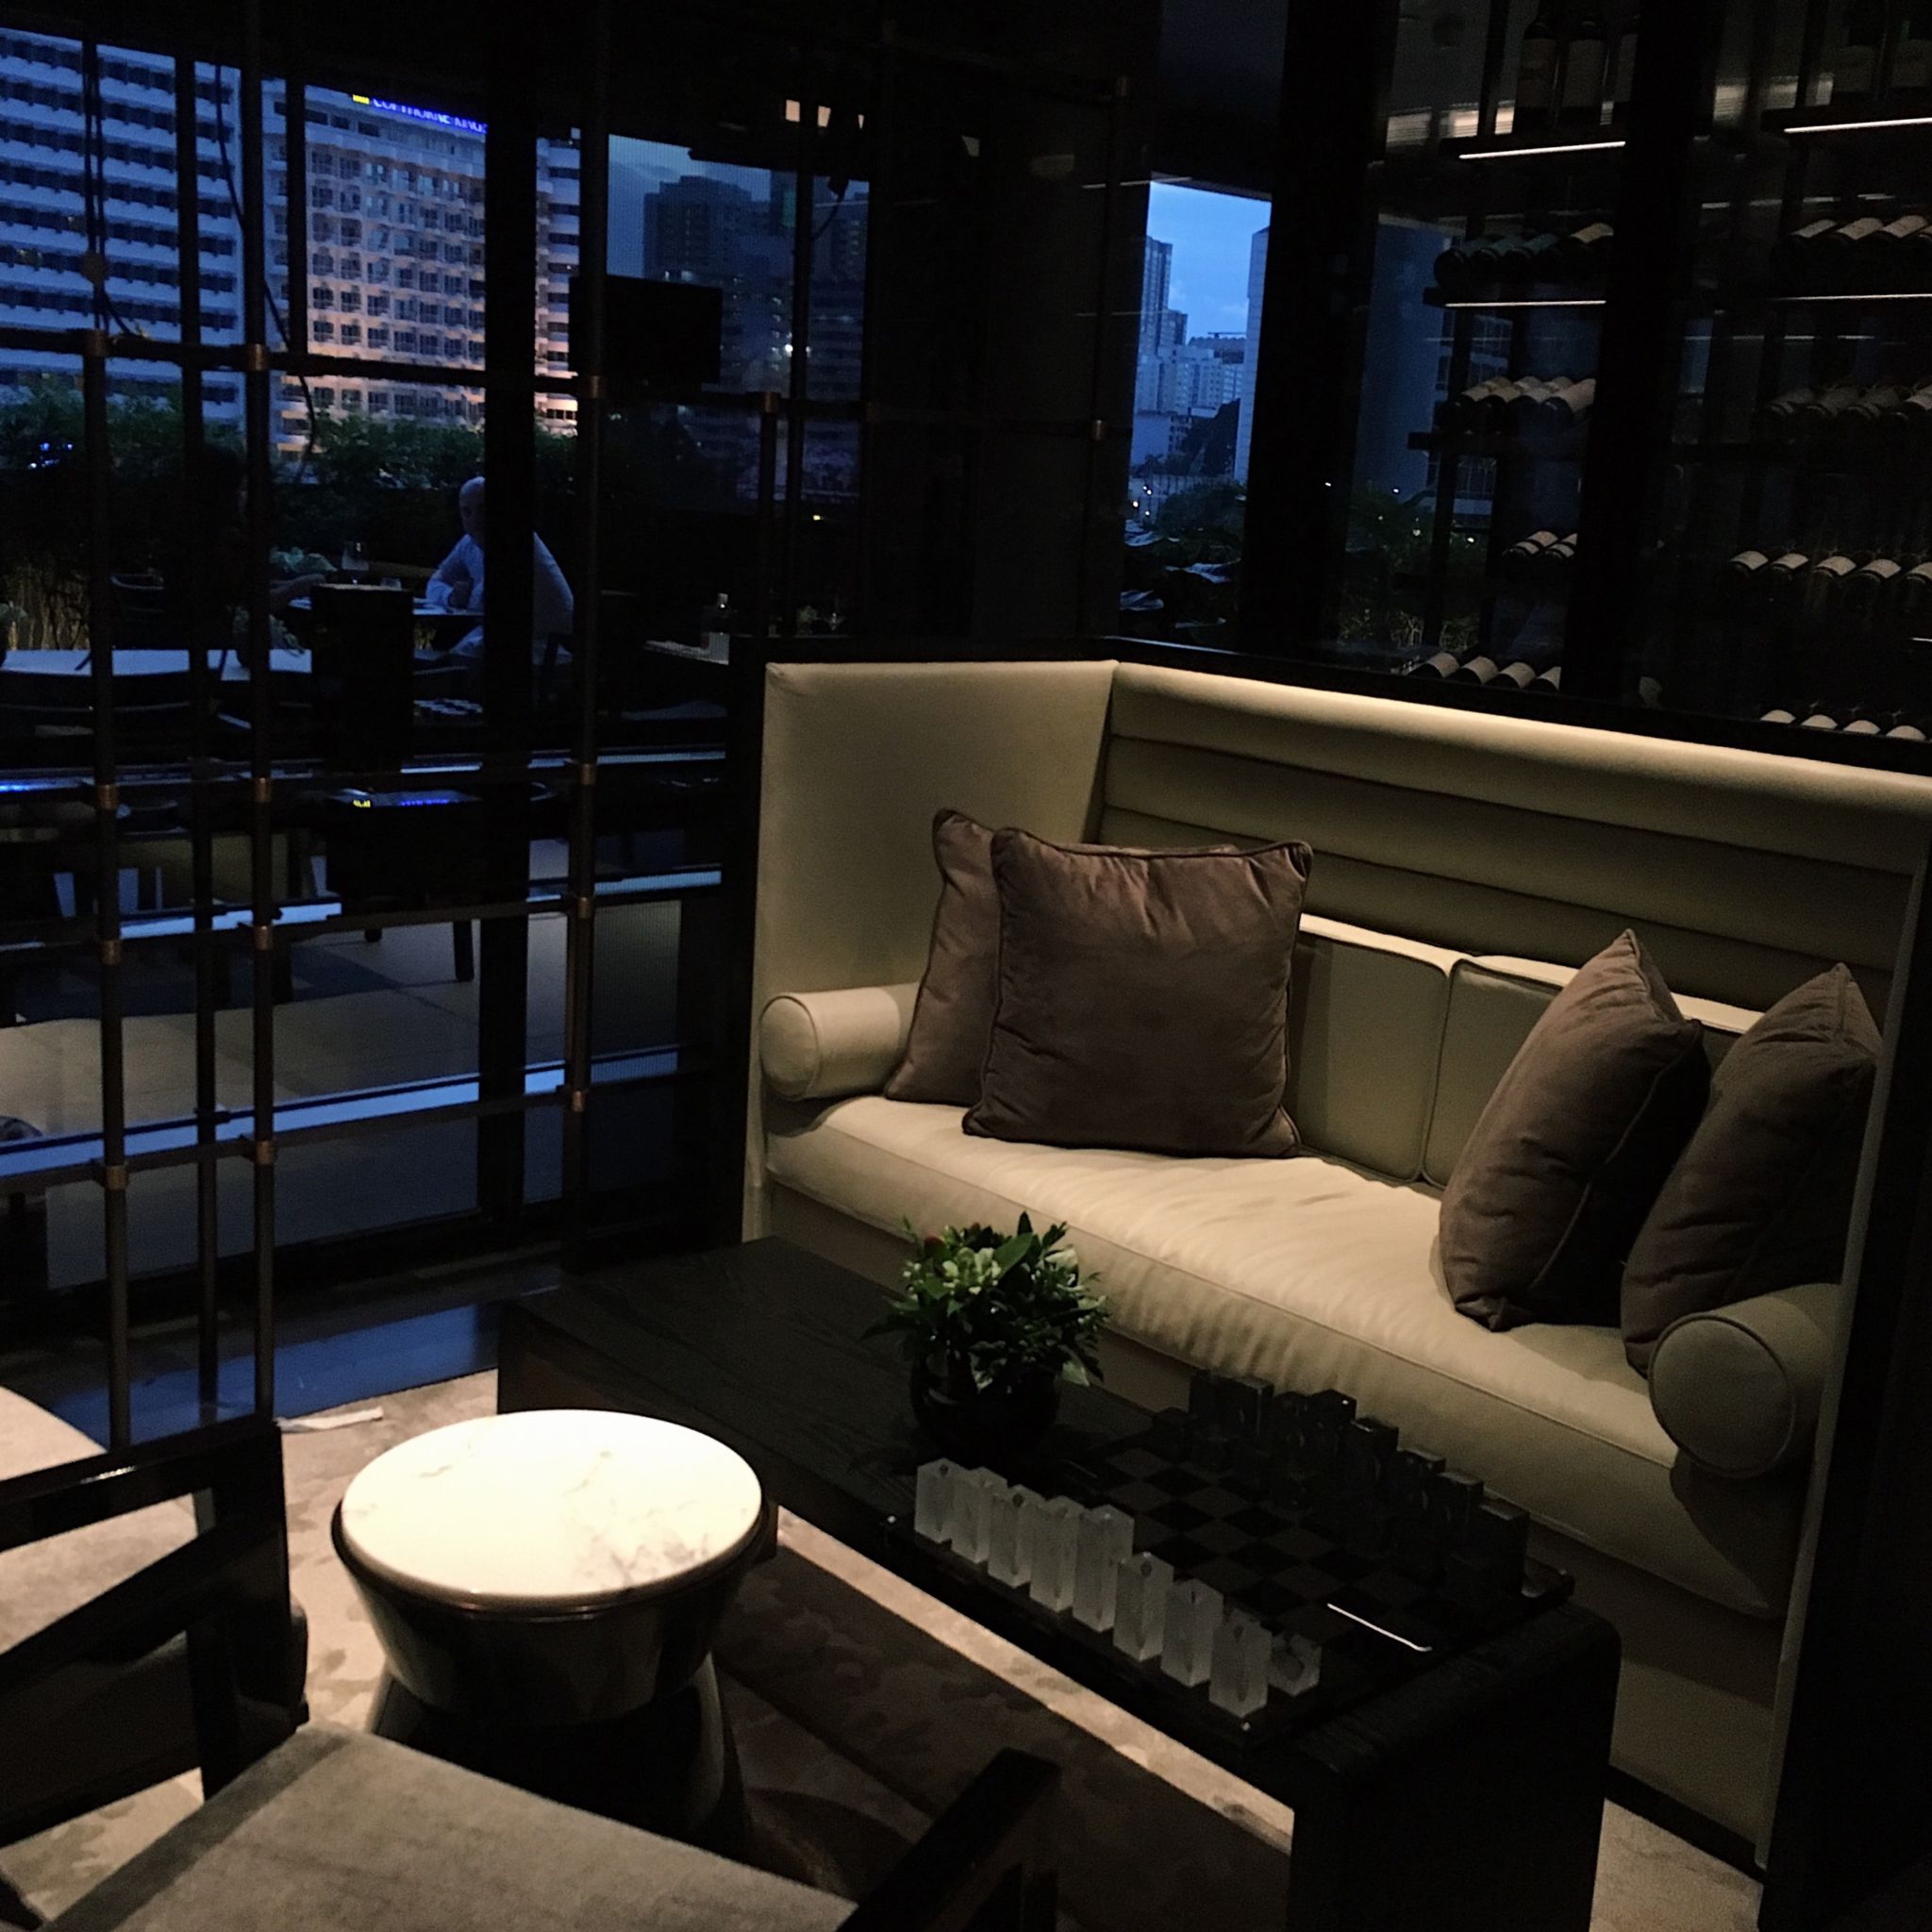 Club InterContinental Lounge - nterContinental Singapore Robertson Quay